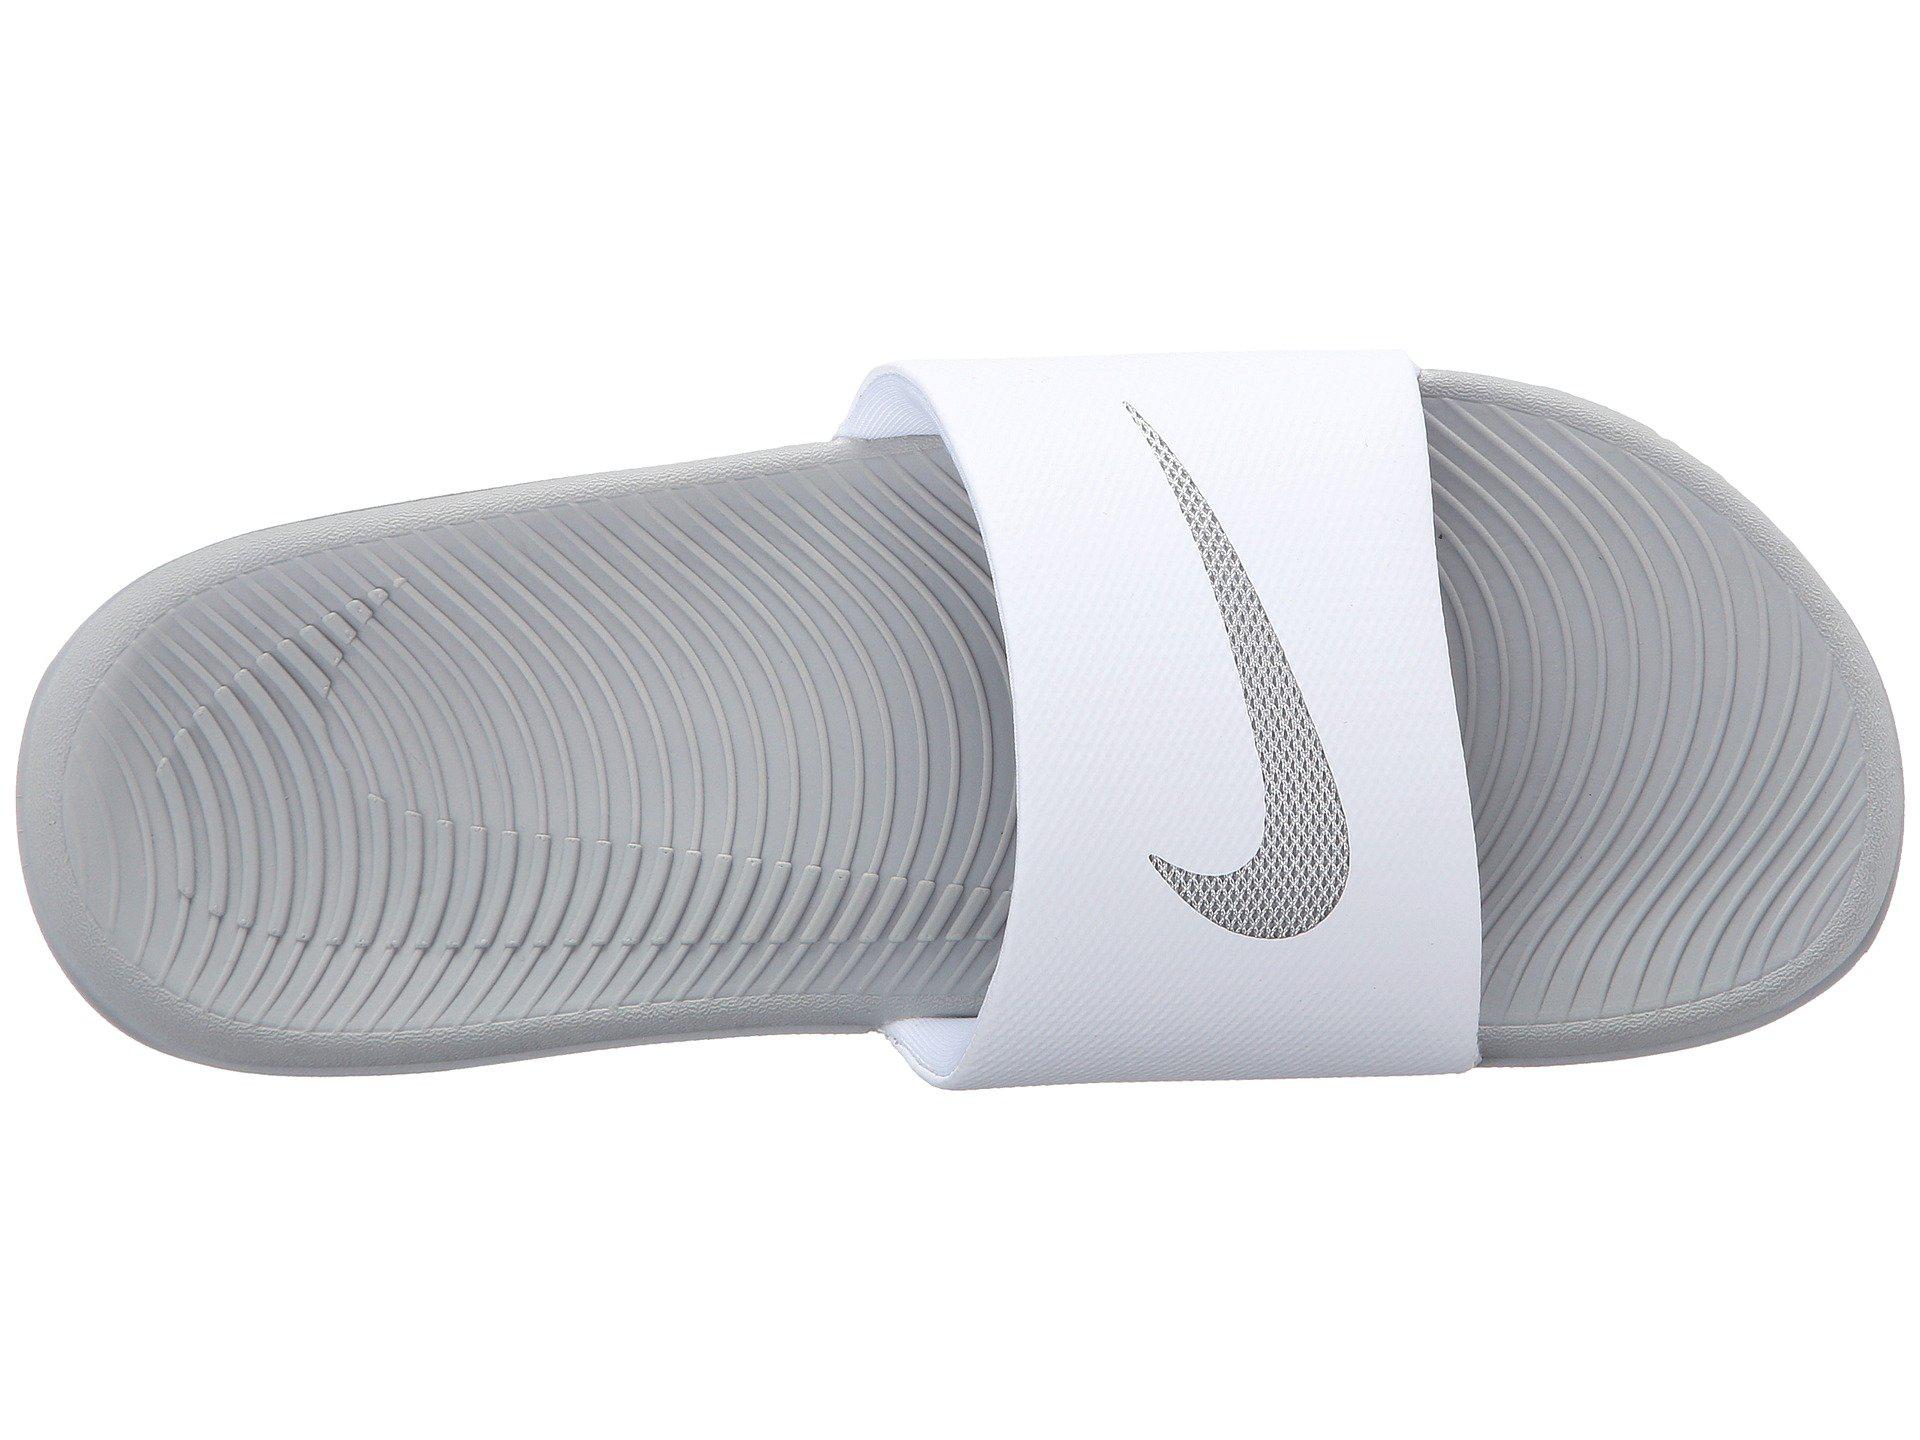 Nike Kawa Slide (white/metallic Silver) Women's Sandals | Lyst